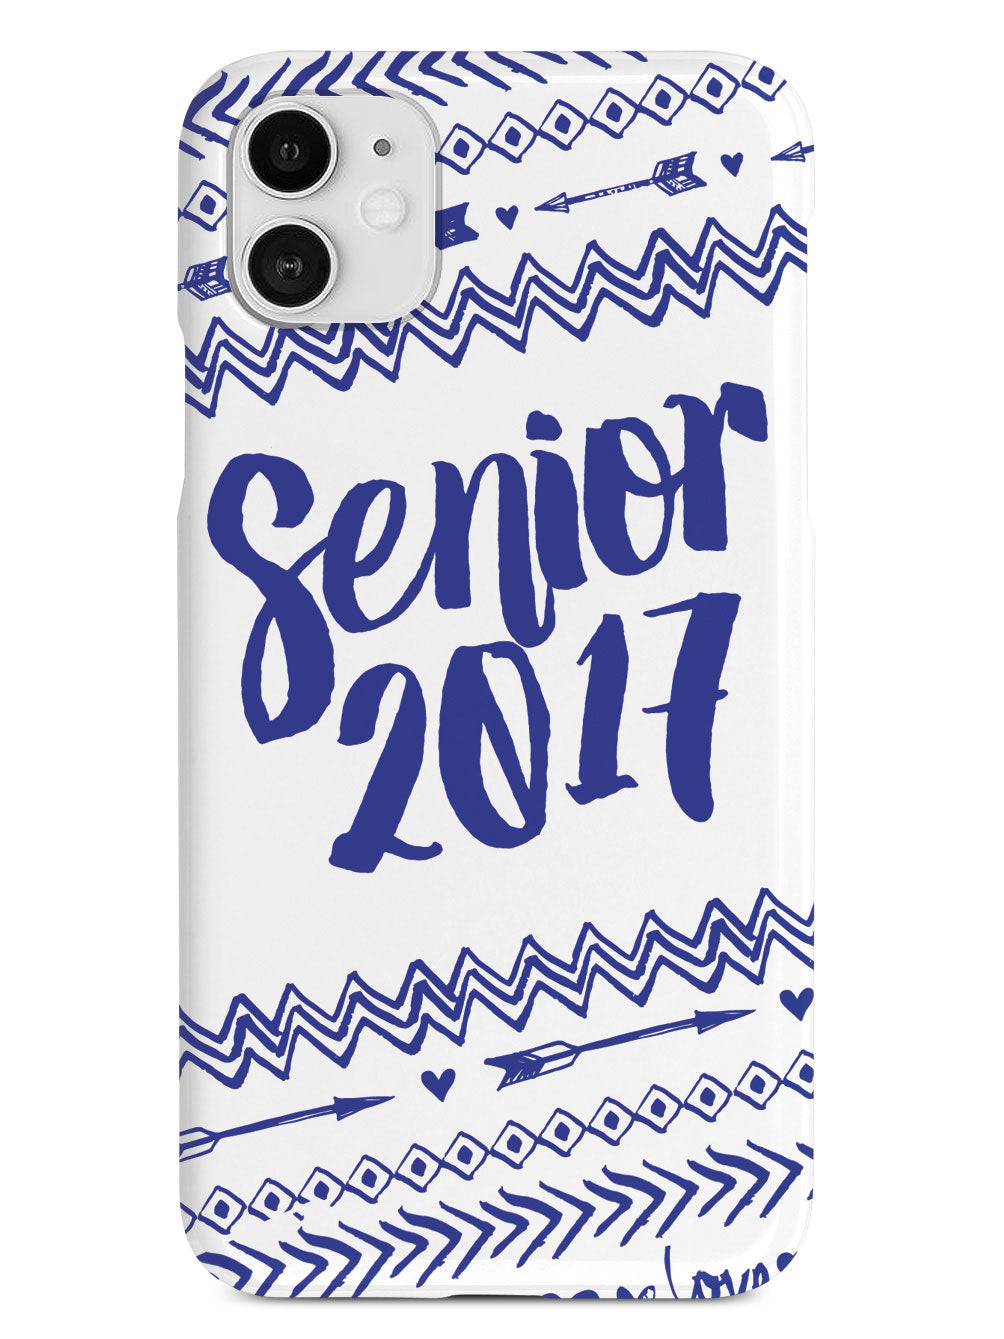 Senior 2017 - Blue Case